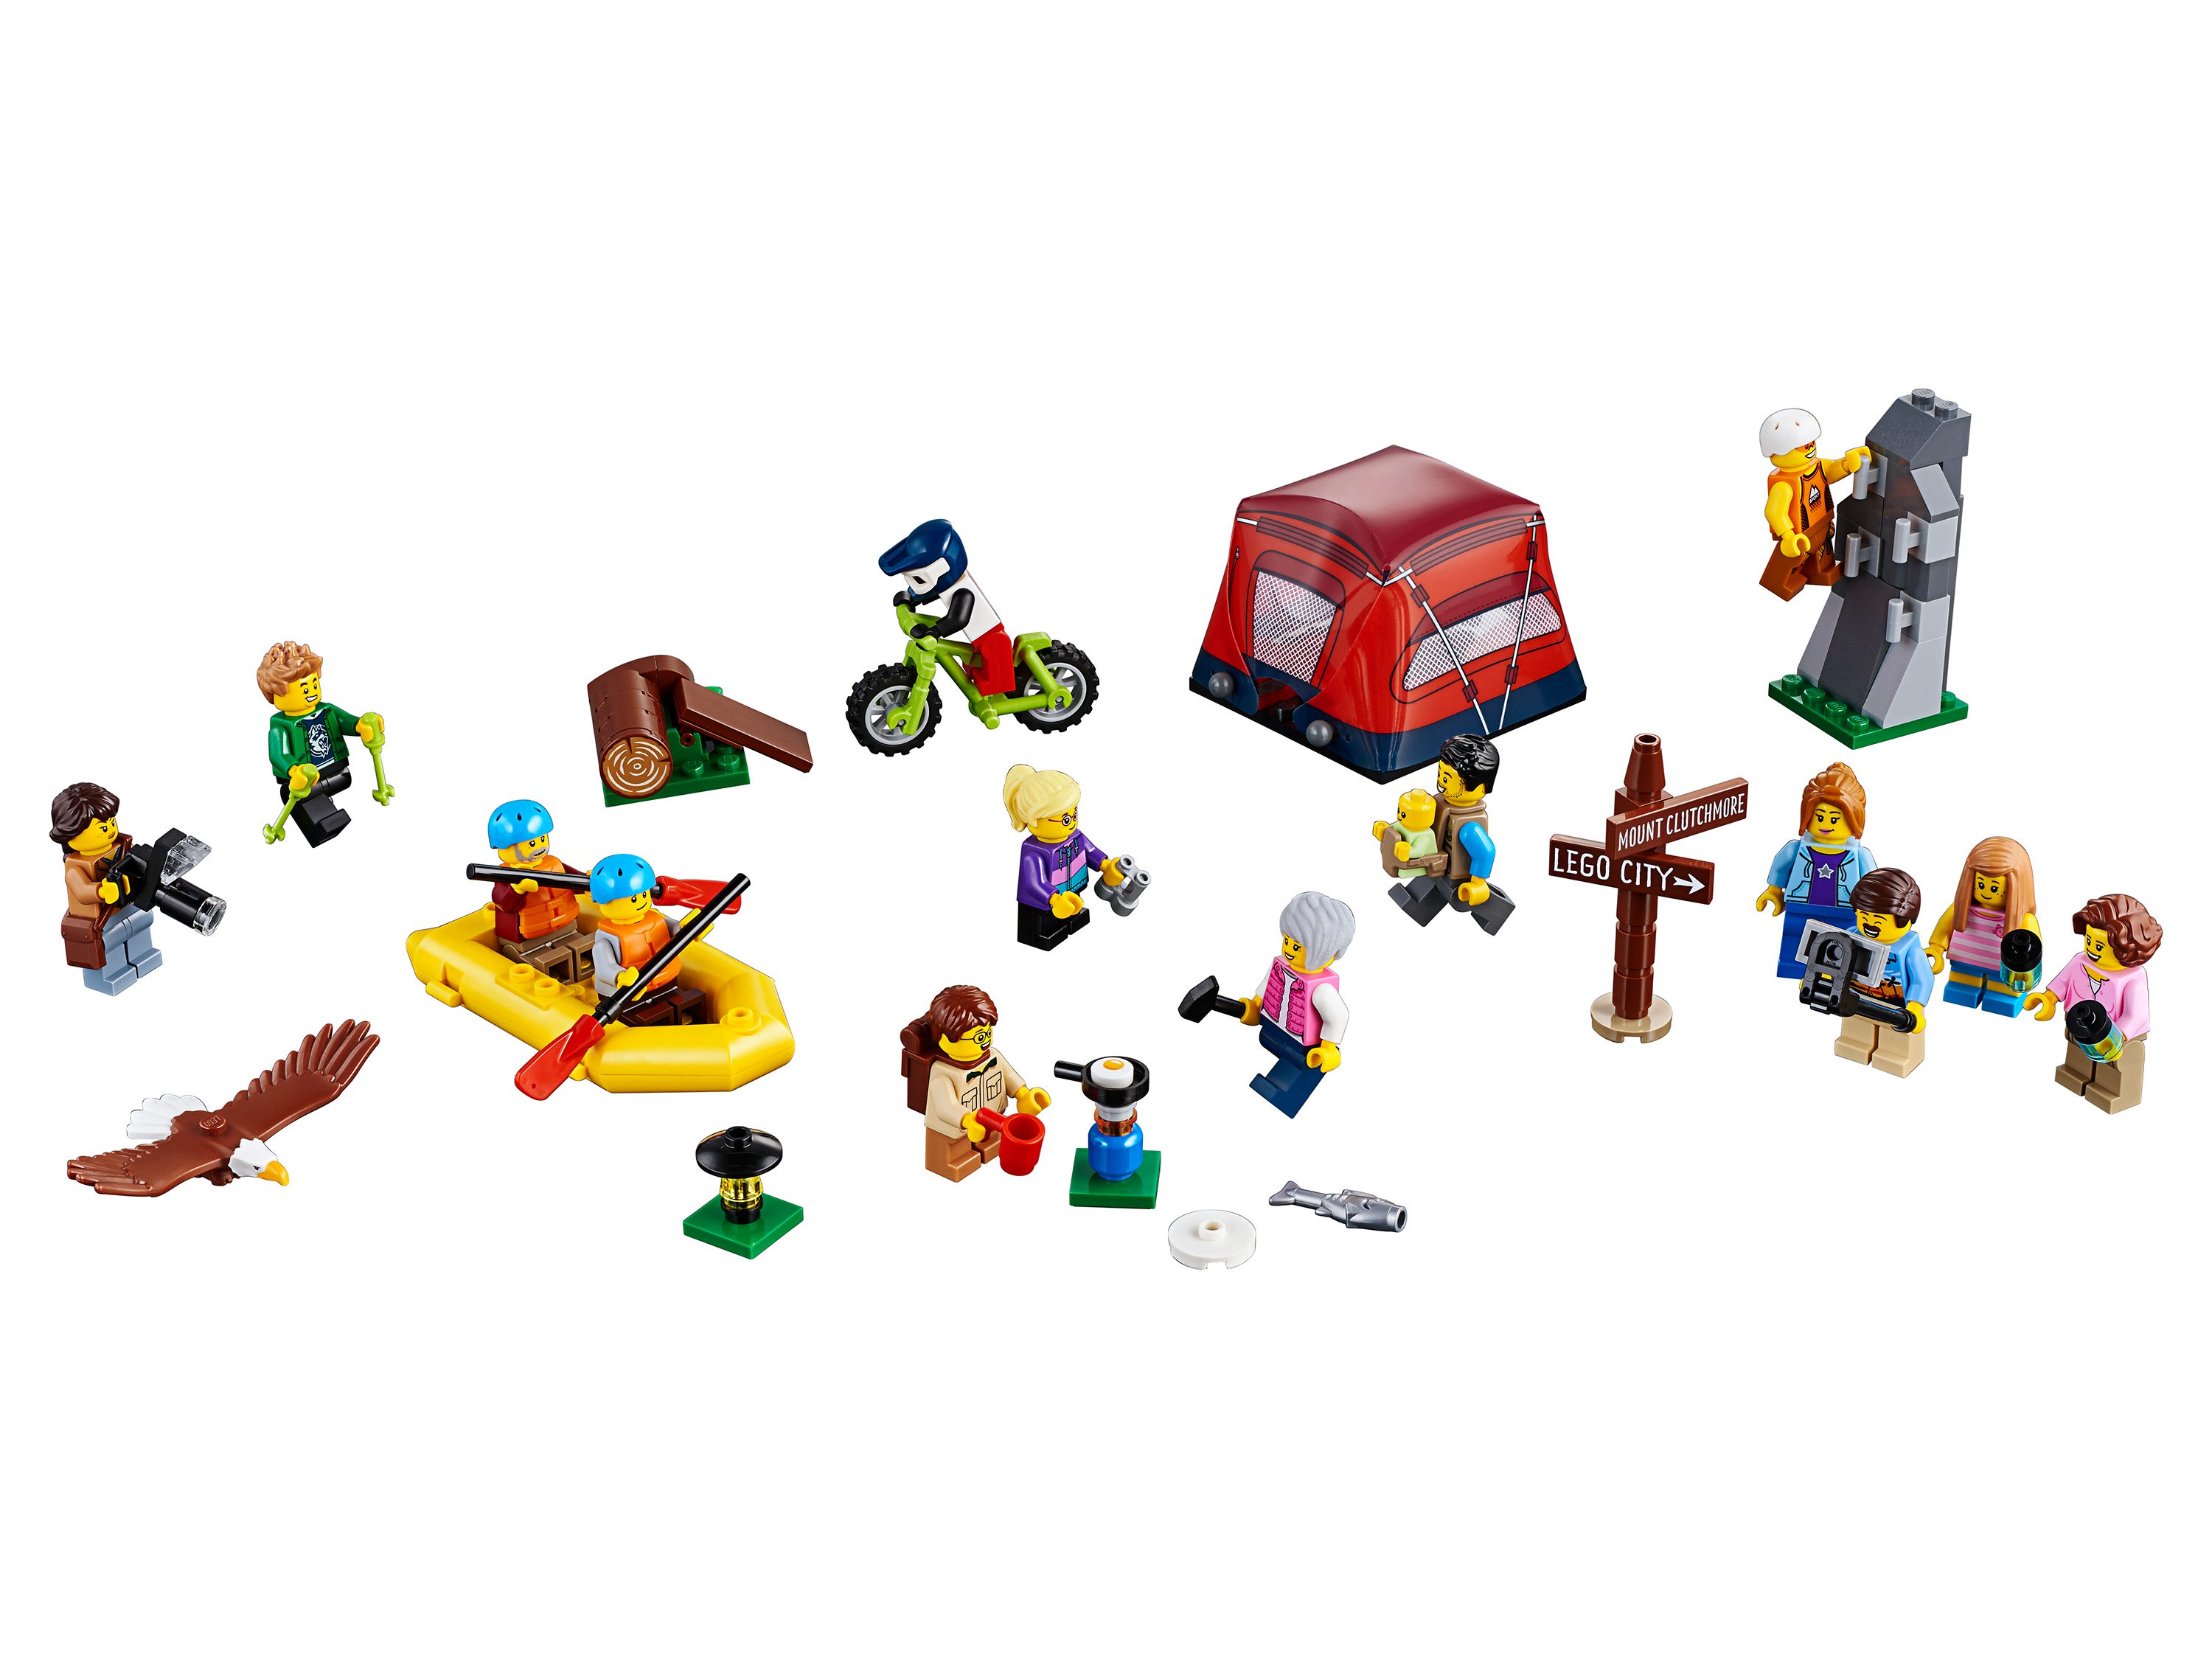 Lego City 60202 Любители активного отдыха